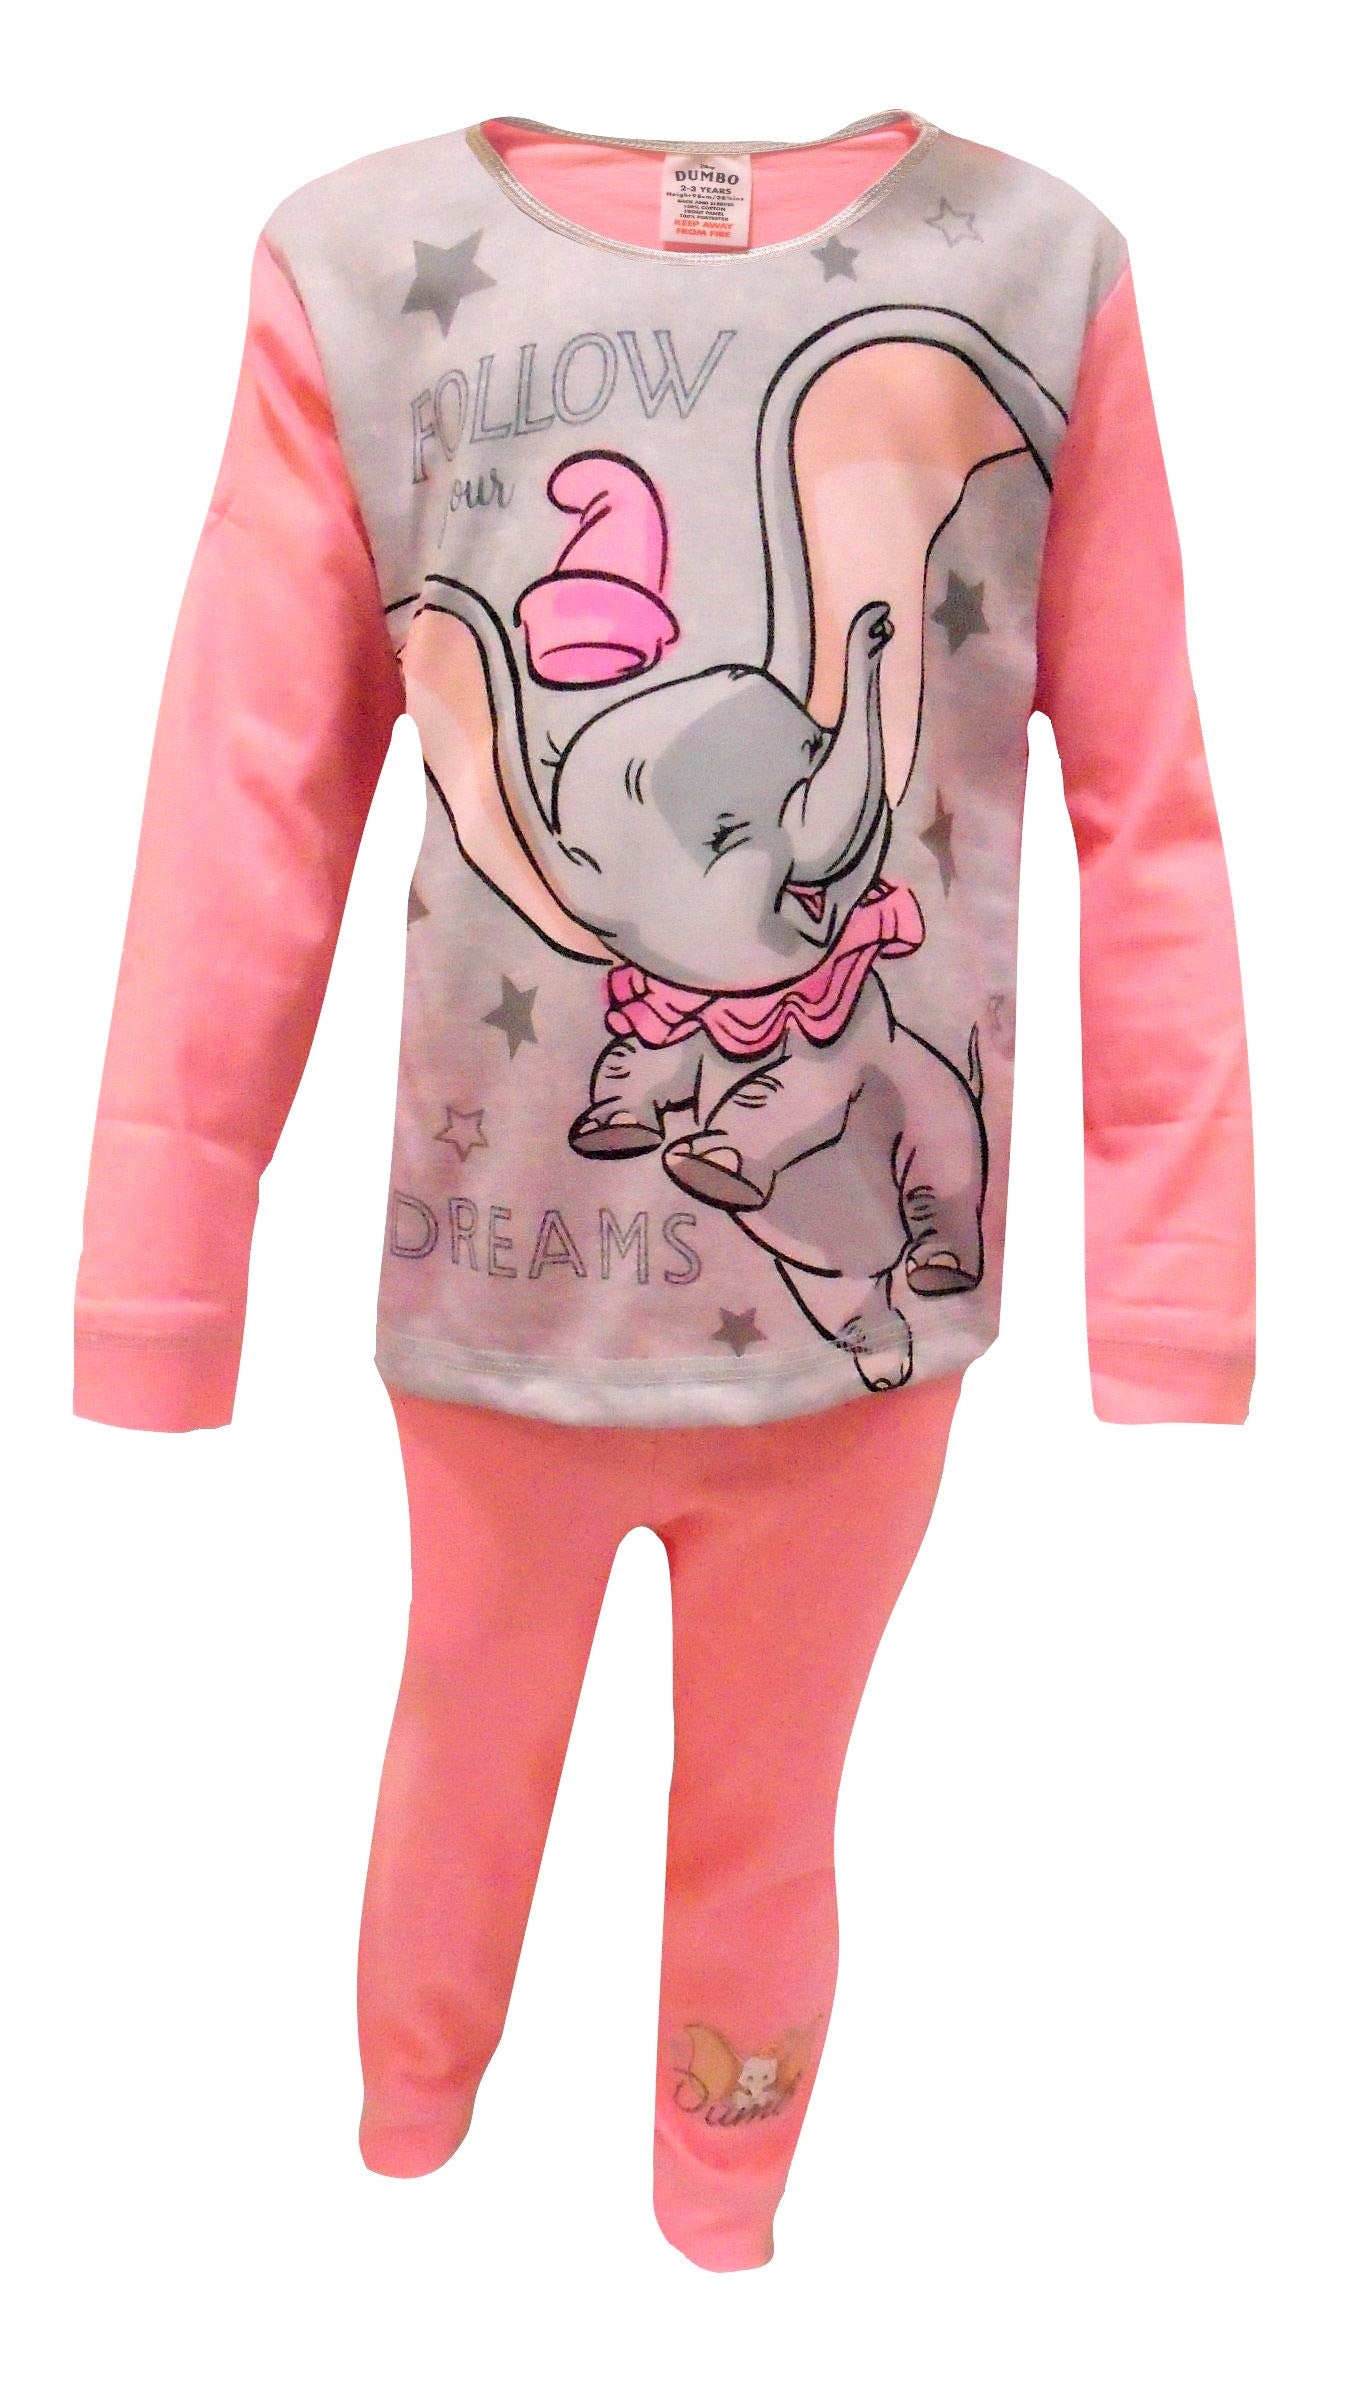 Dumbo "Follow Your Dreams" Girl's Pyjamas